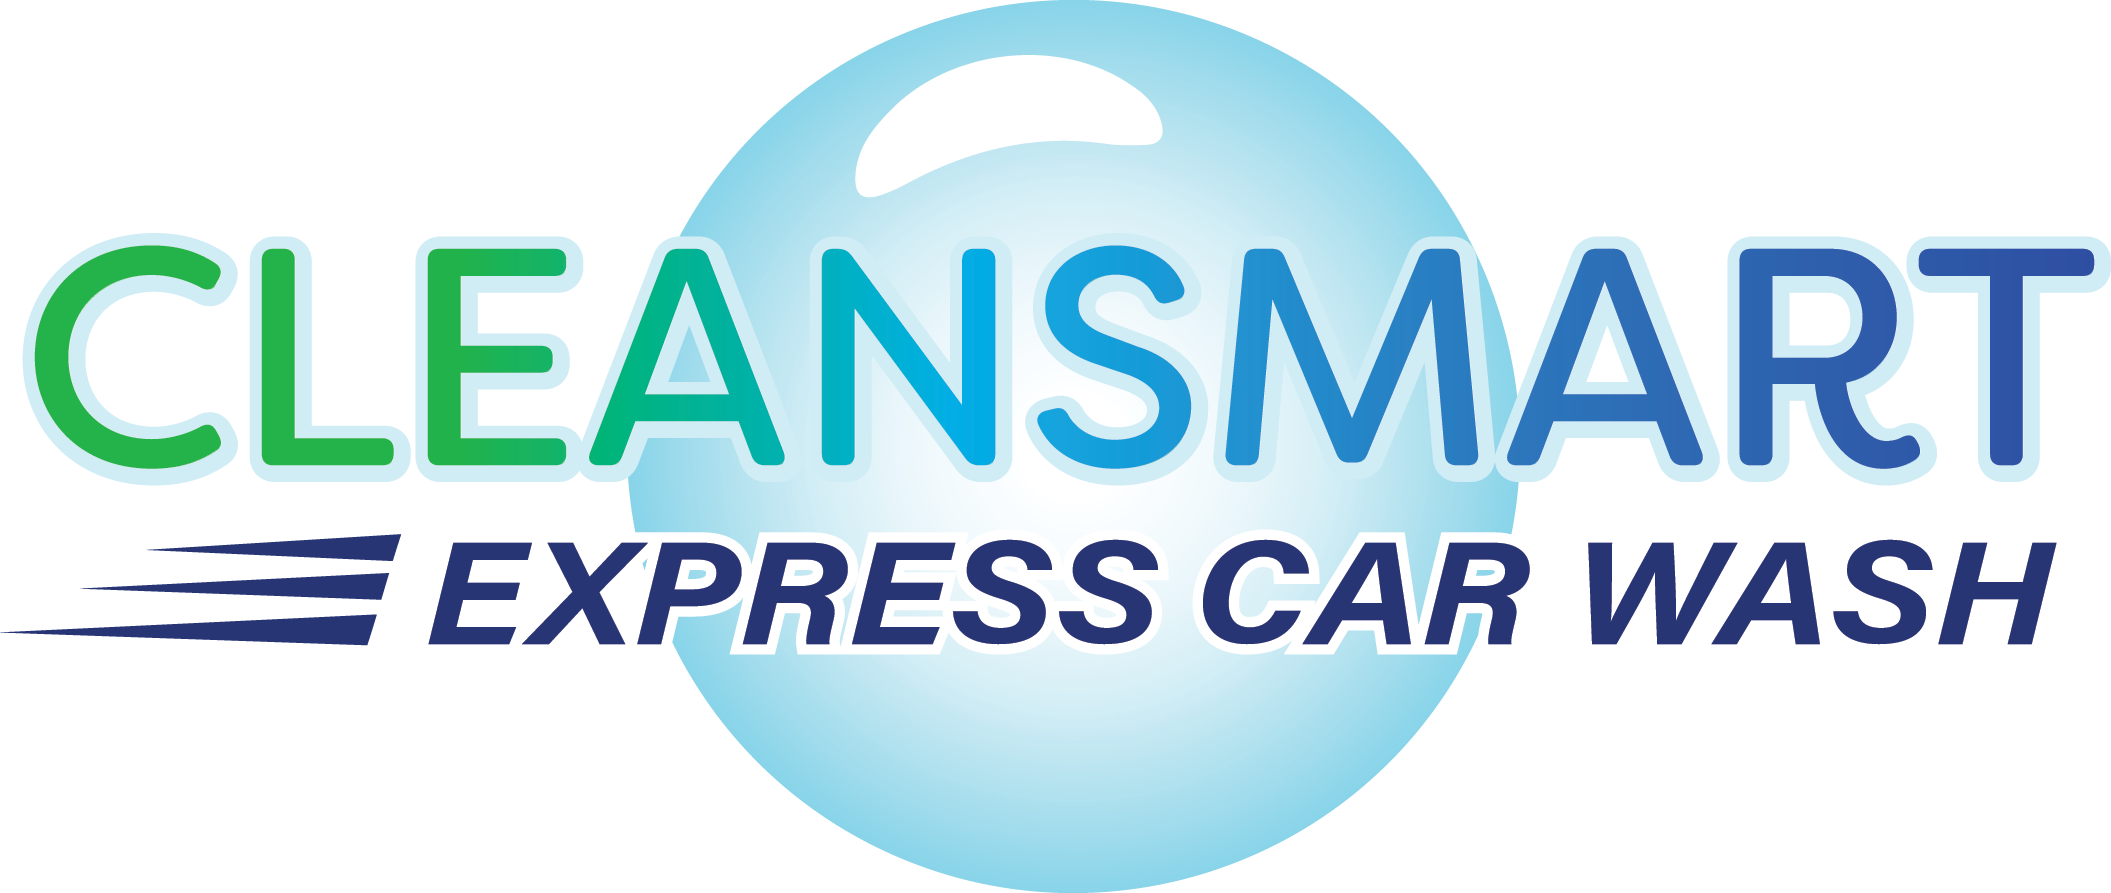 Clean Smart Express Car Wash